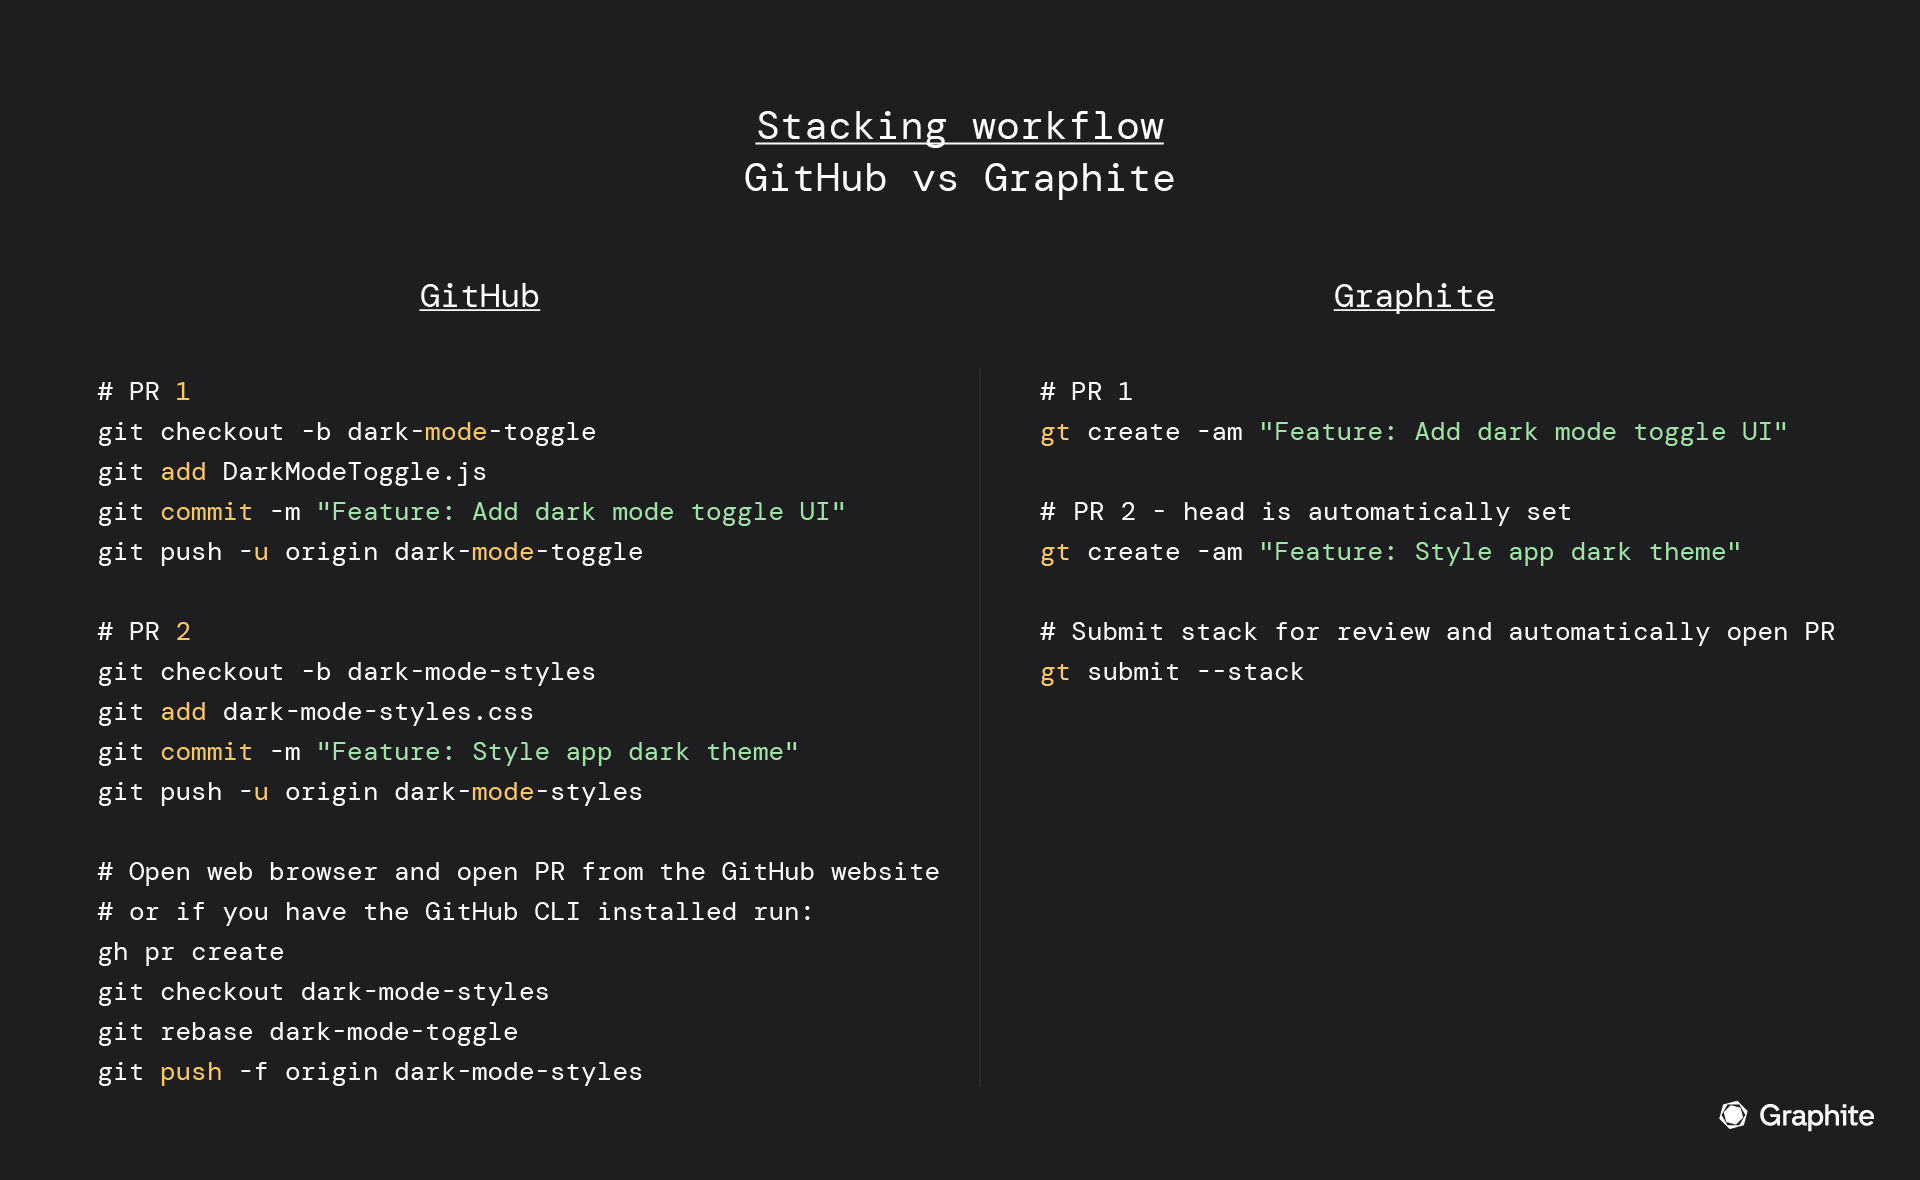 stacking workflow GitHub vs Graphite